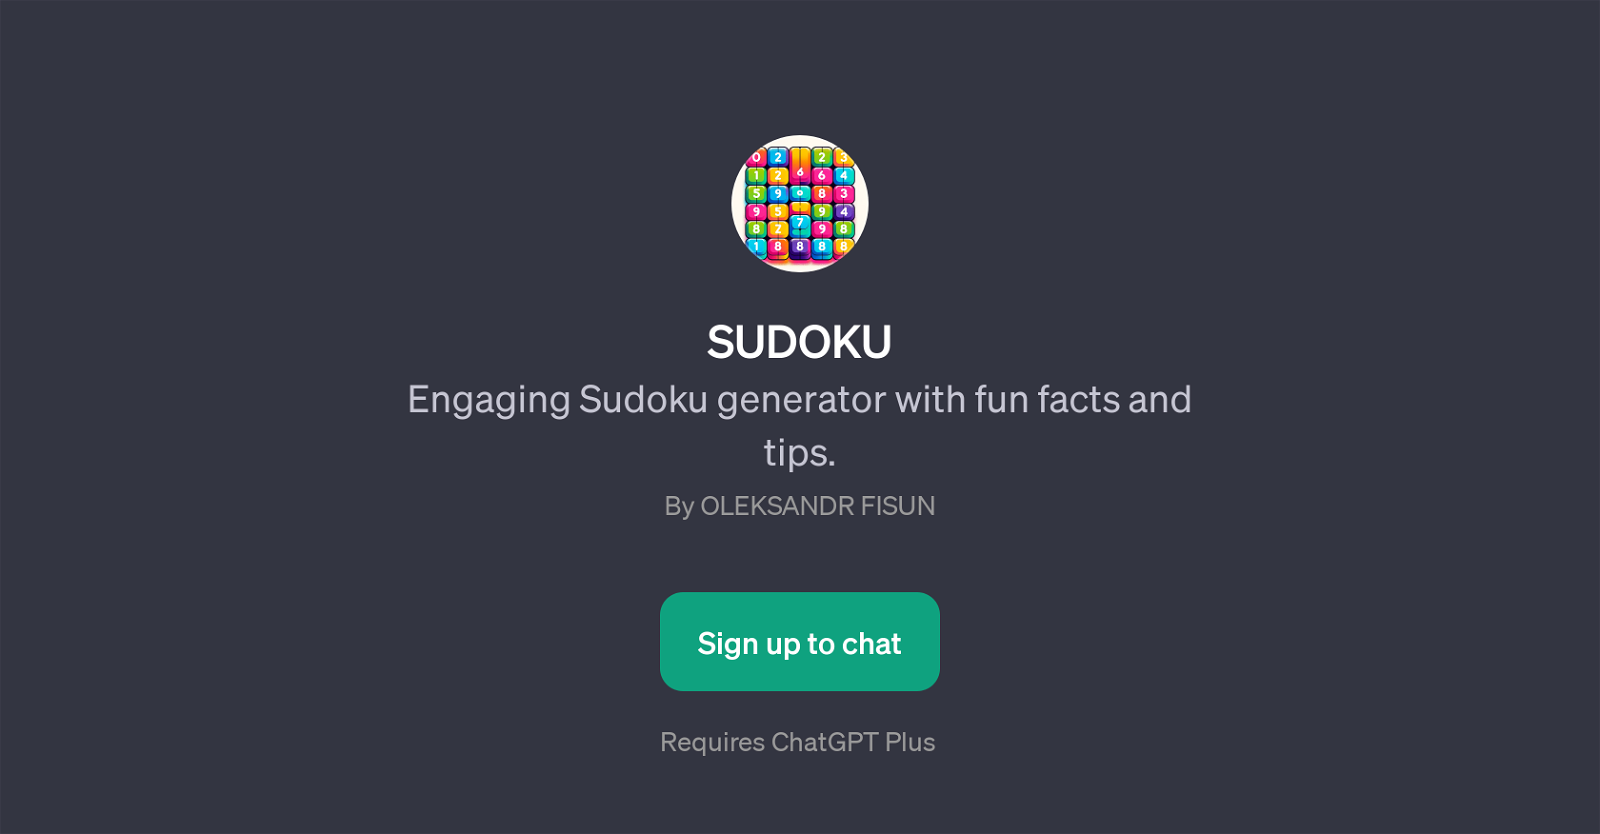 SUDOKU website